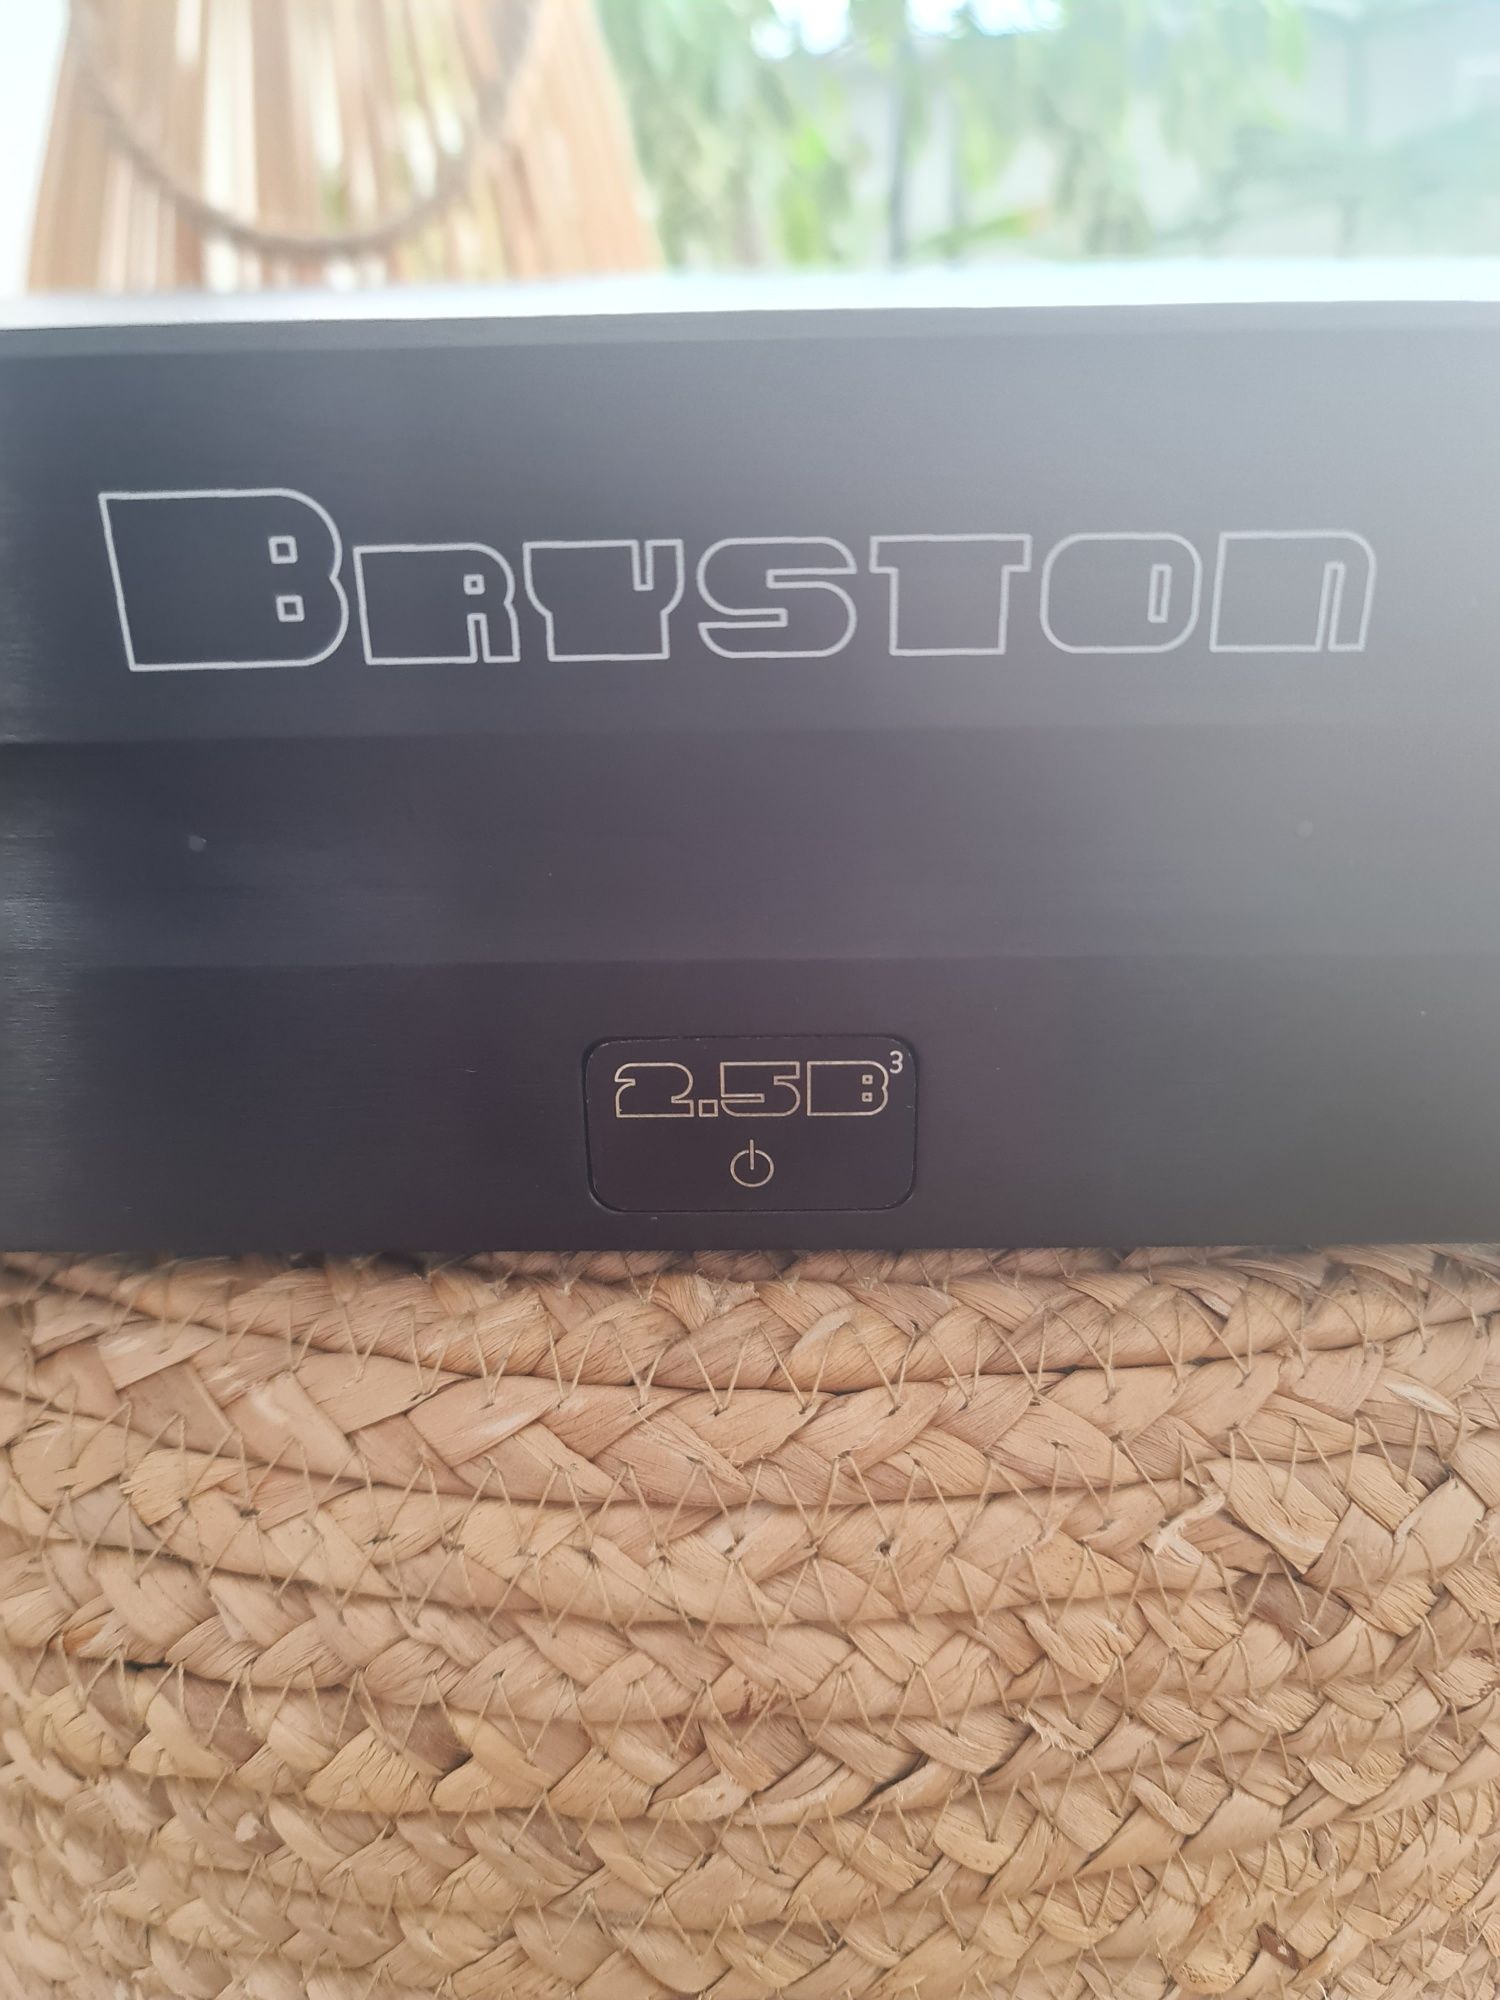 Bryston 2.5B3 Cubed , końcówka mocy 180w/kanał , 15 lat gwarancji!